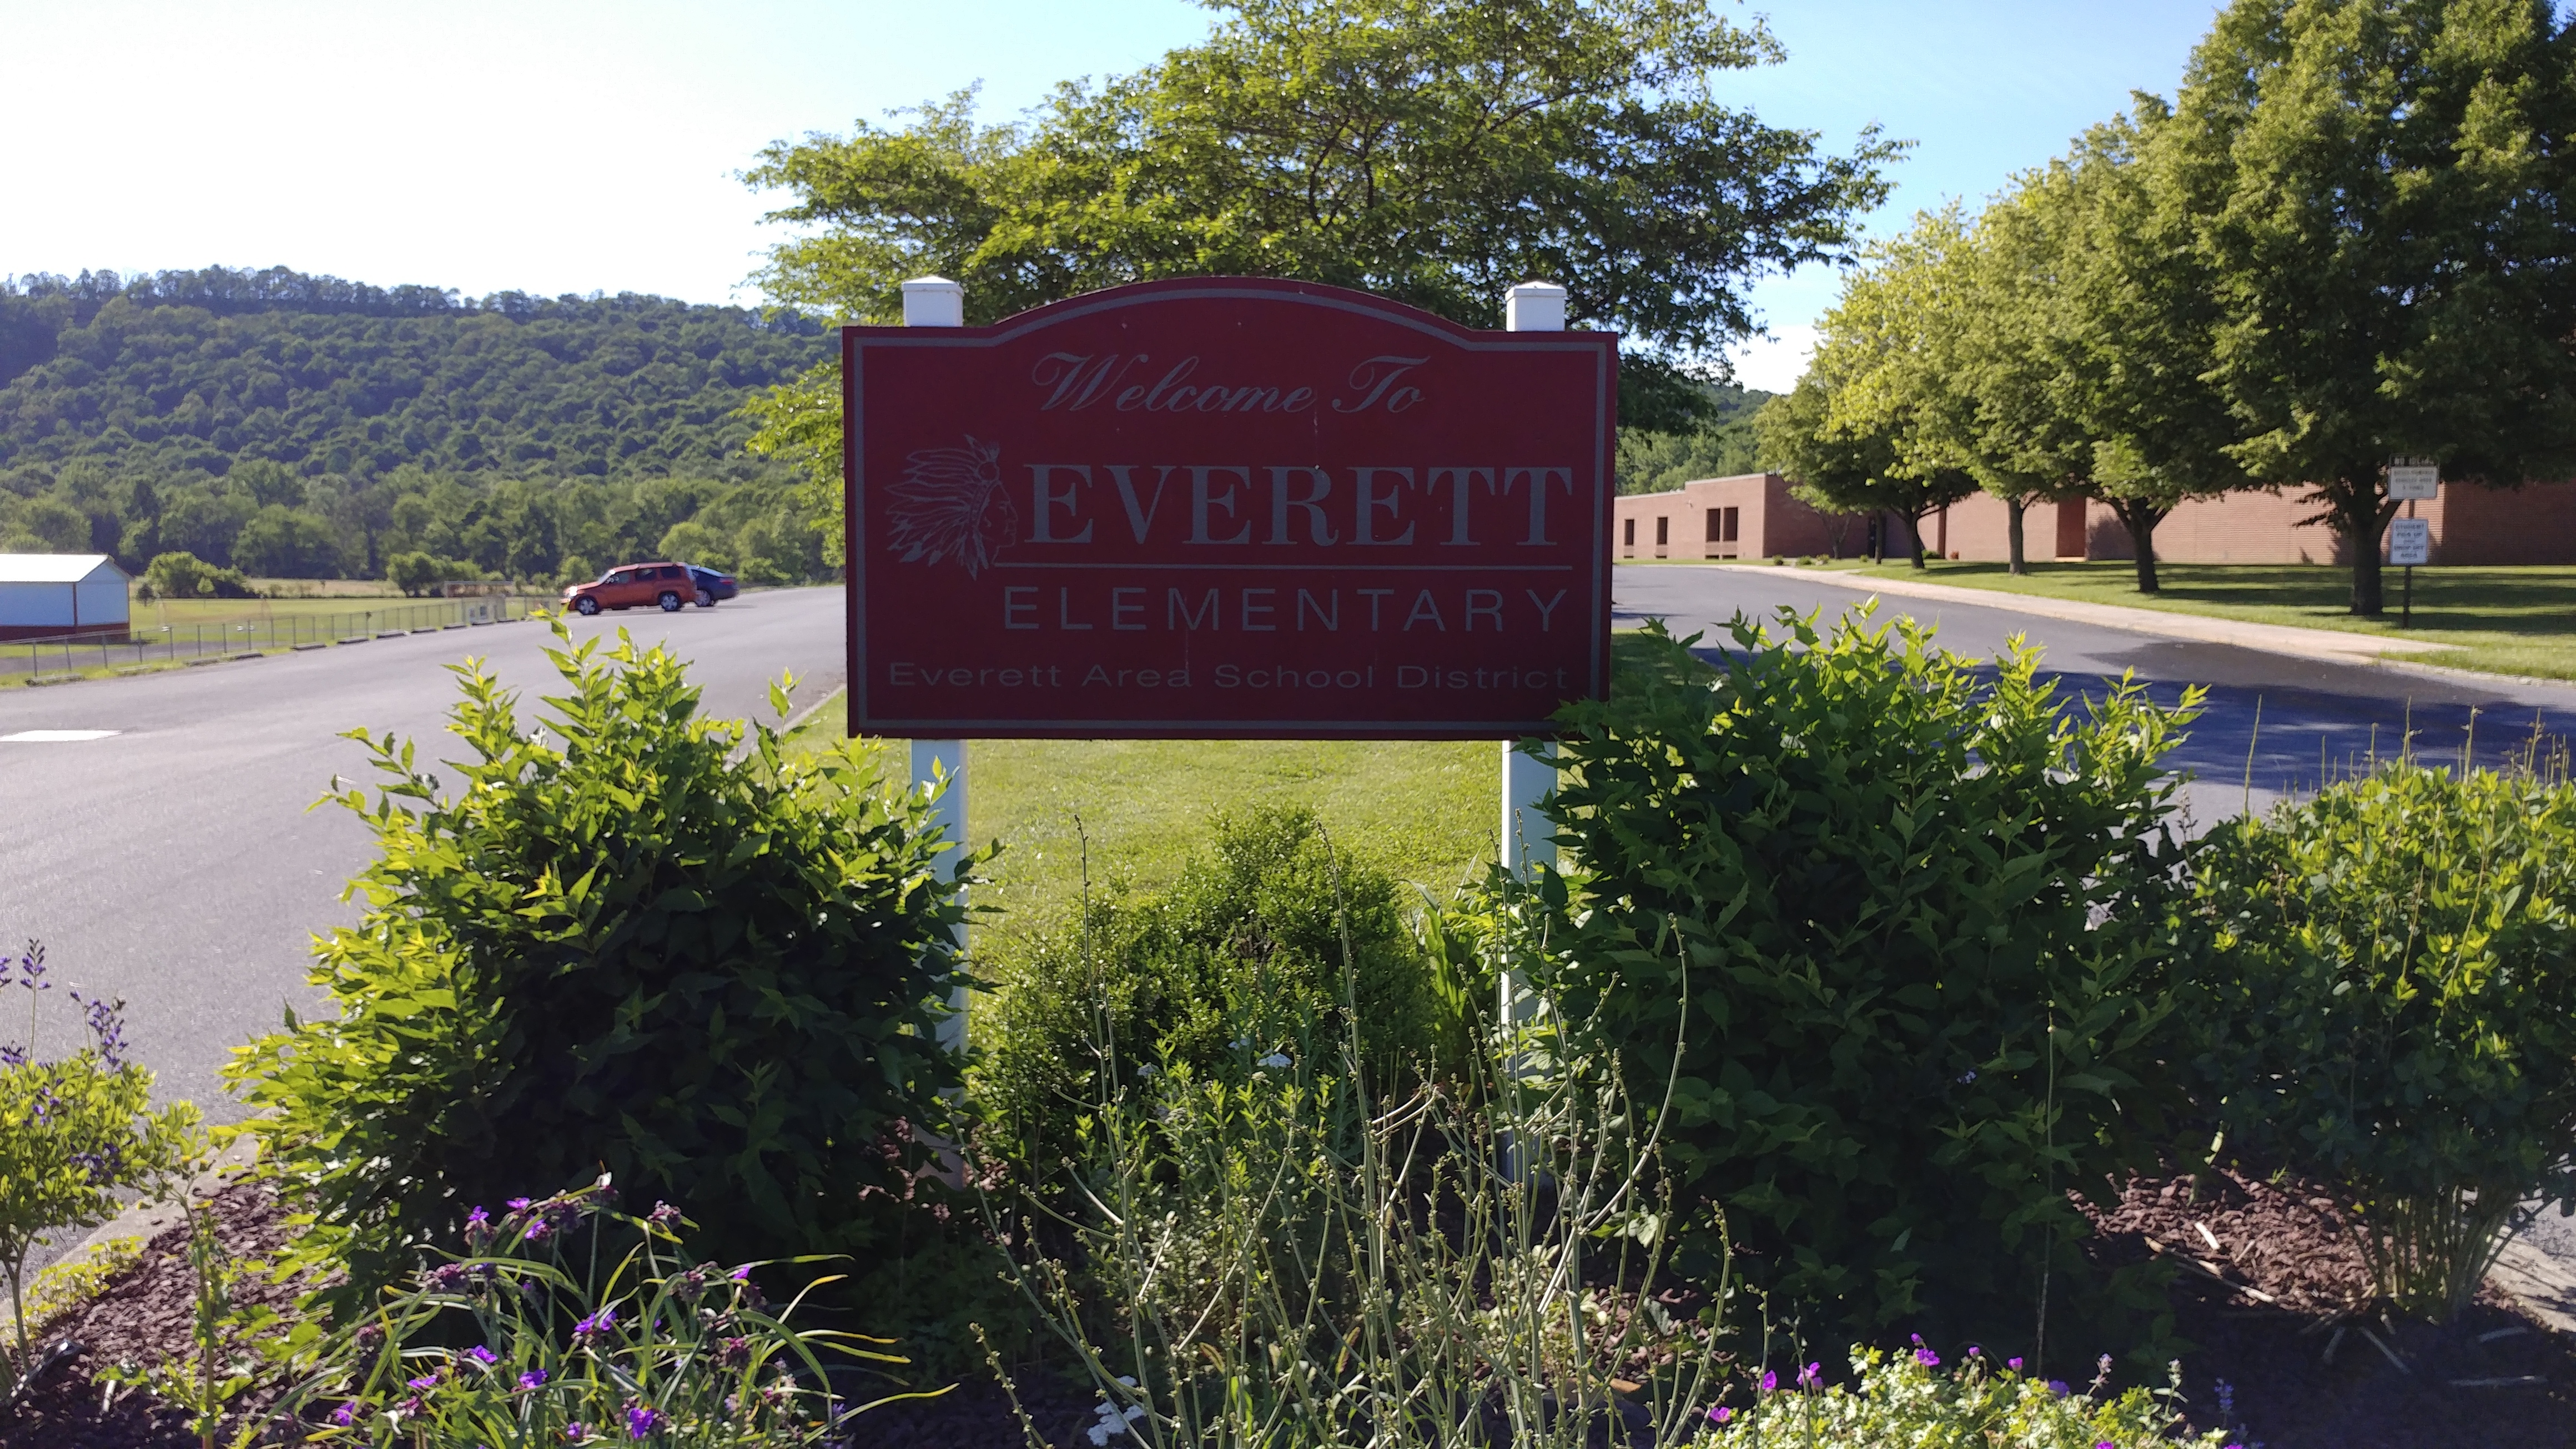 Everett Elementary School